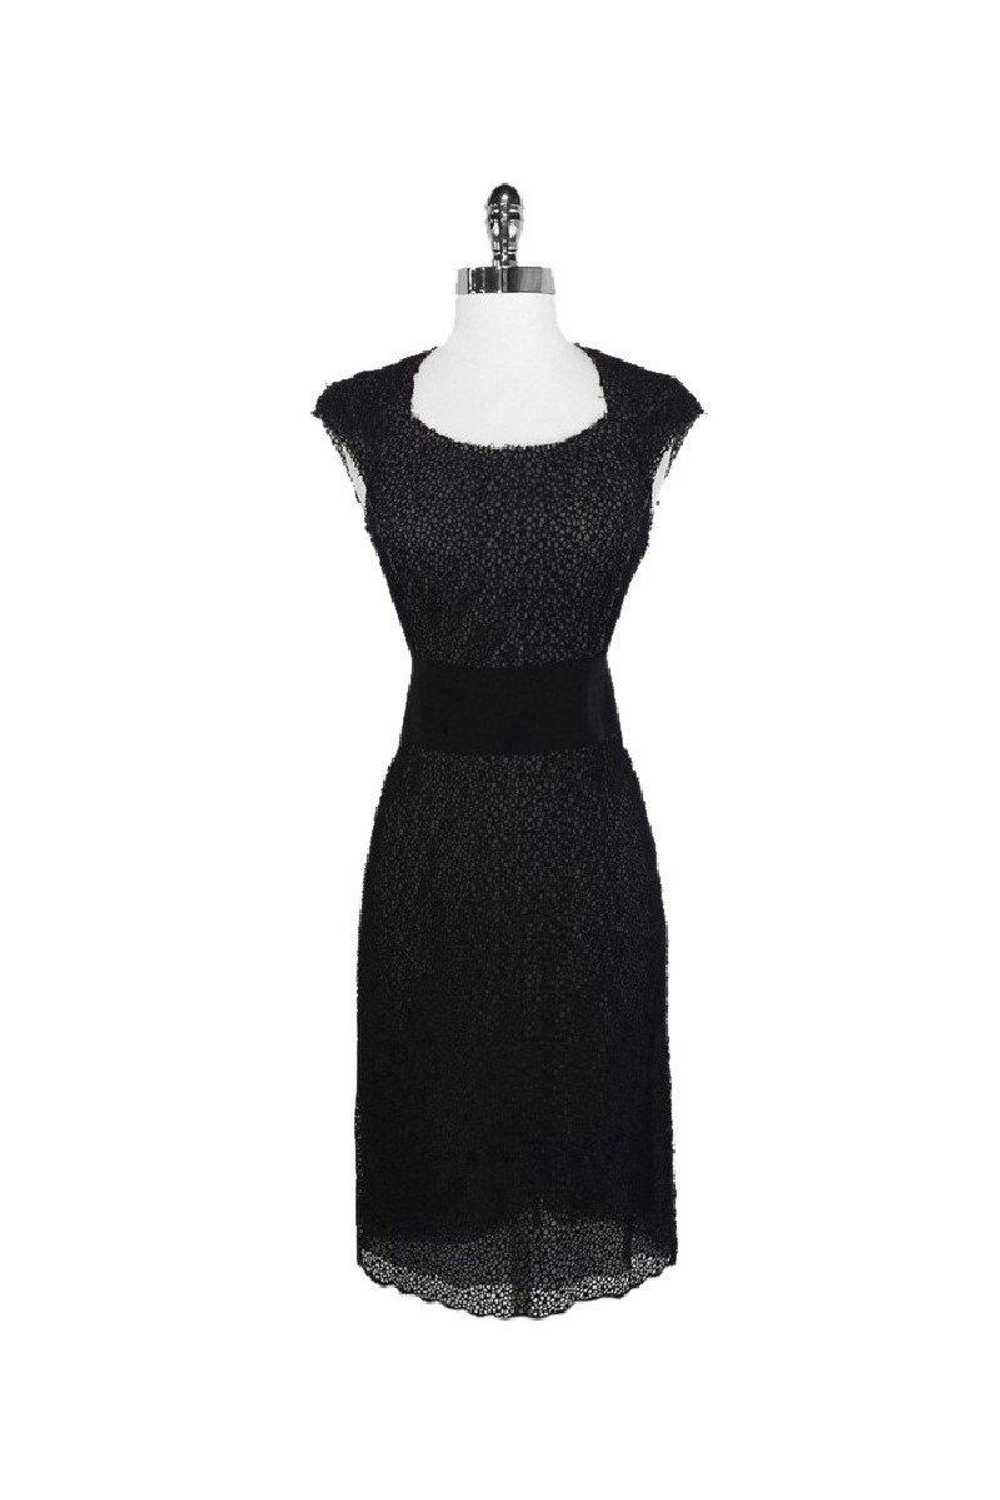 Ports 1961 - Black Lace Cap Sleeve Dress Sz 2 - image 1